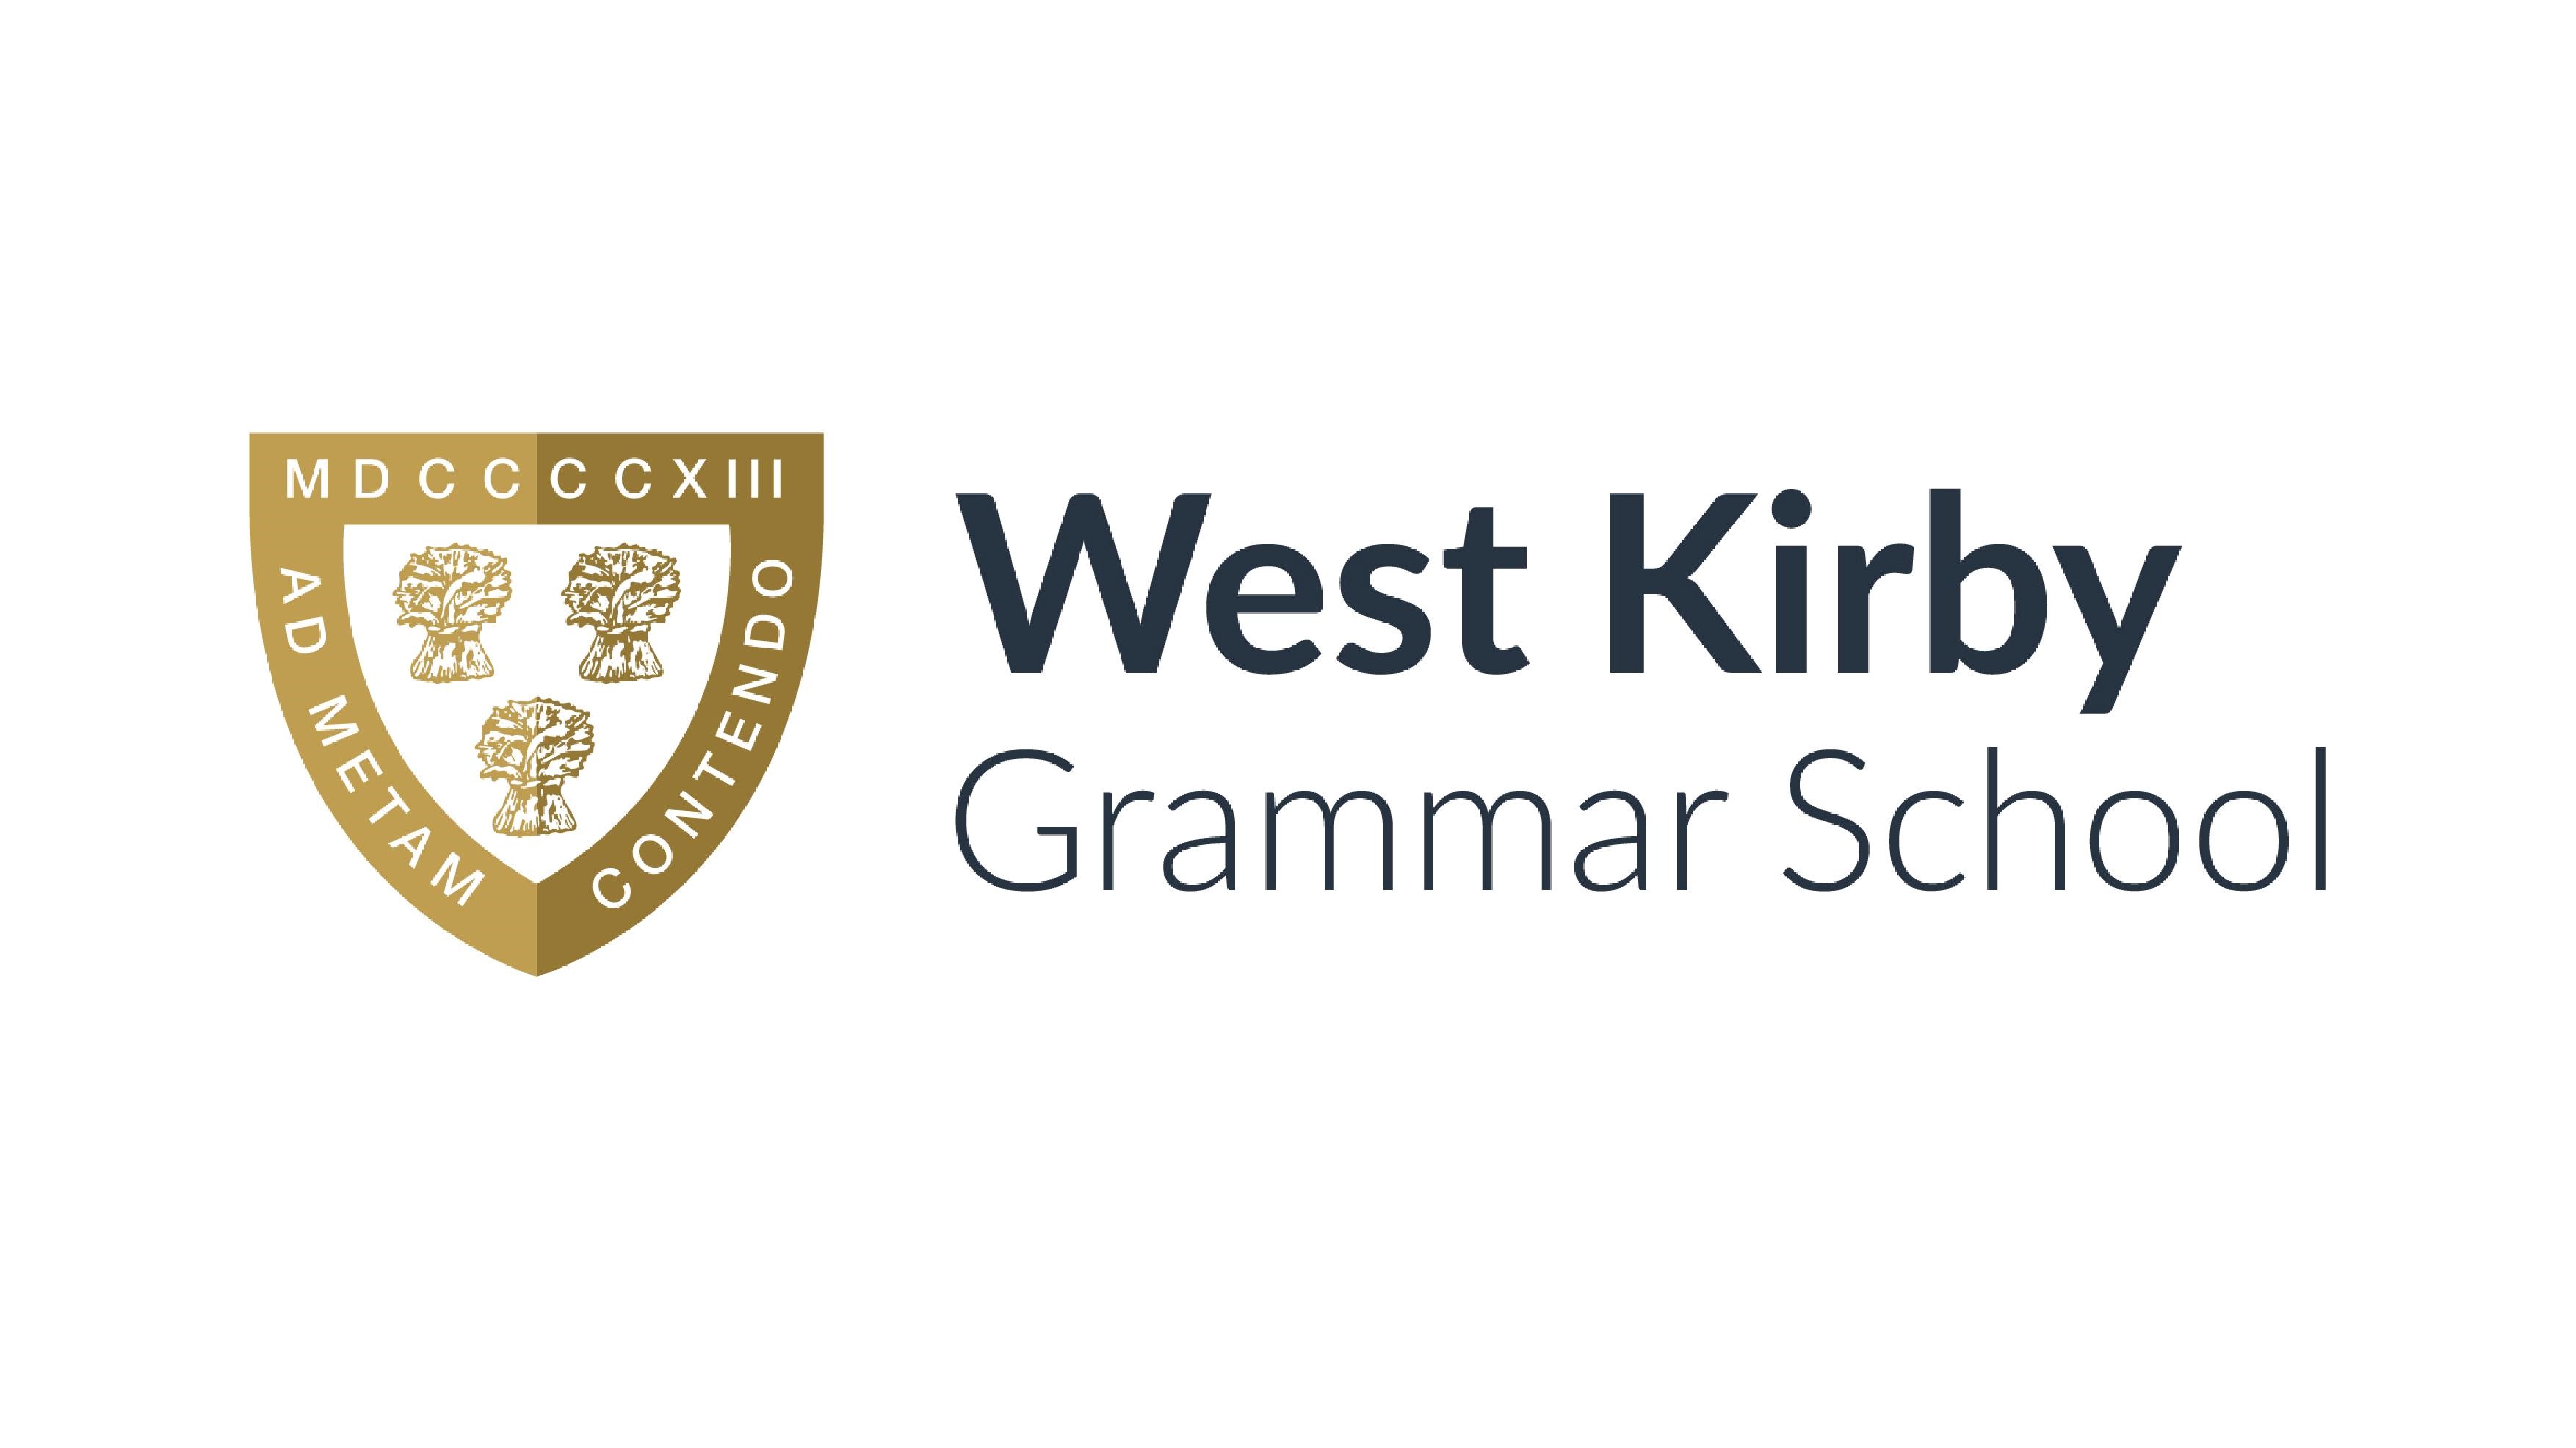 West Kirby Grammar School